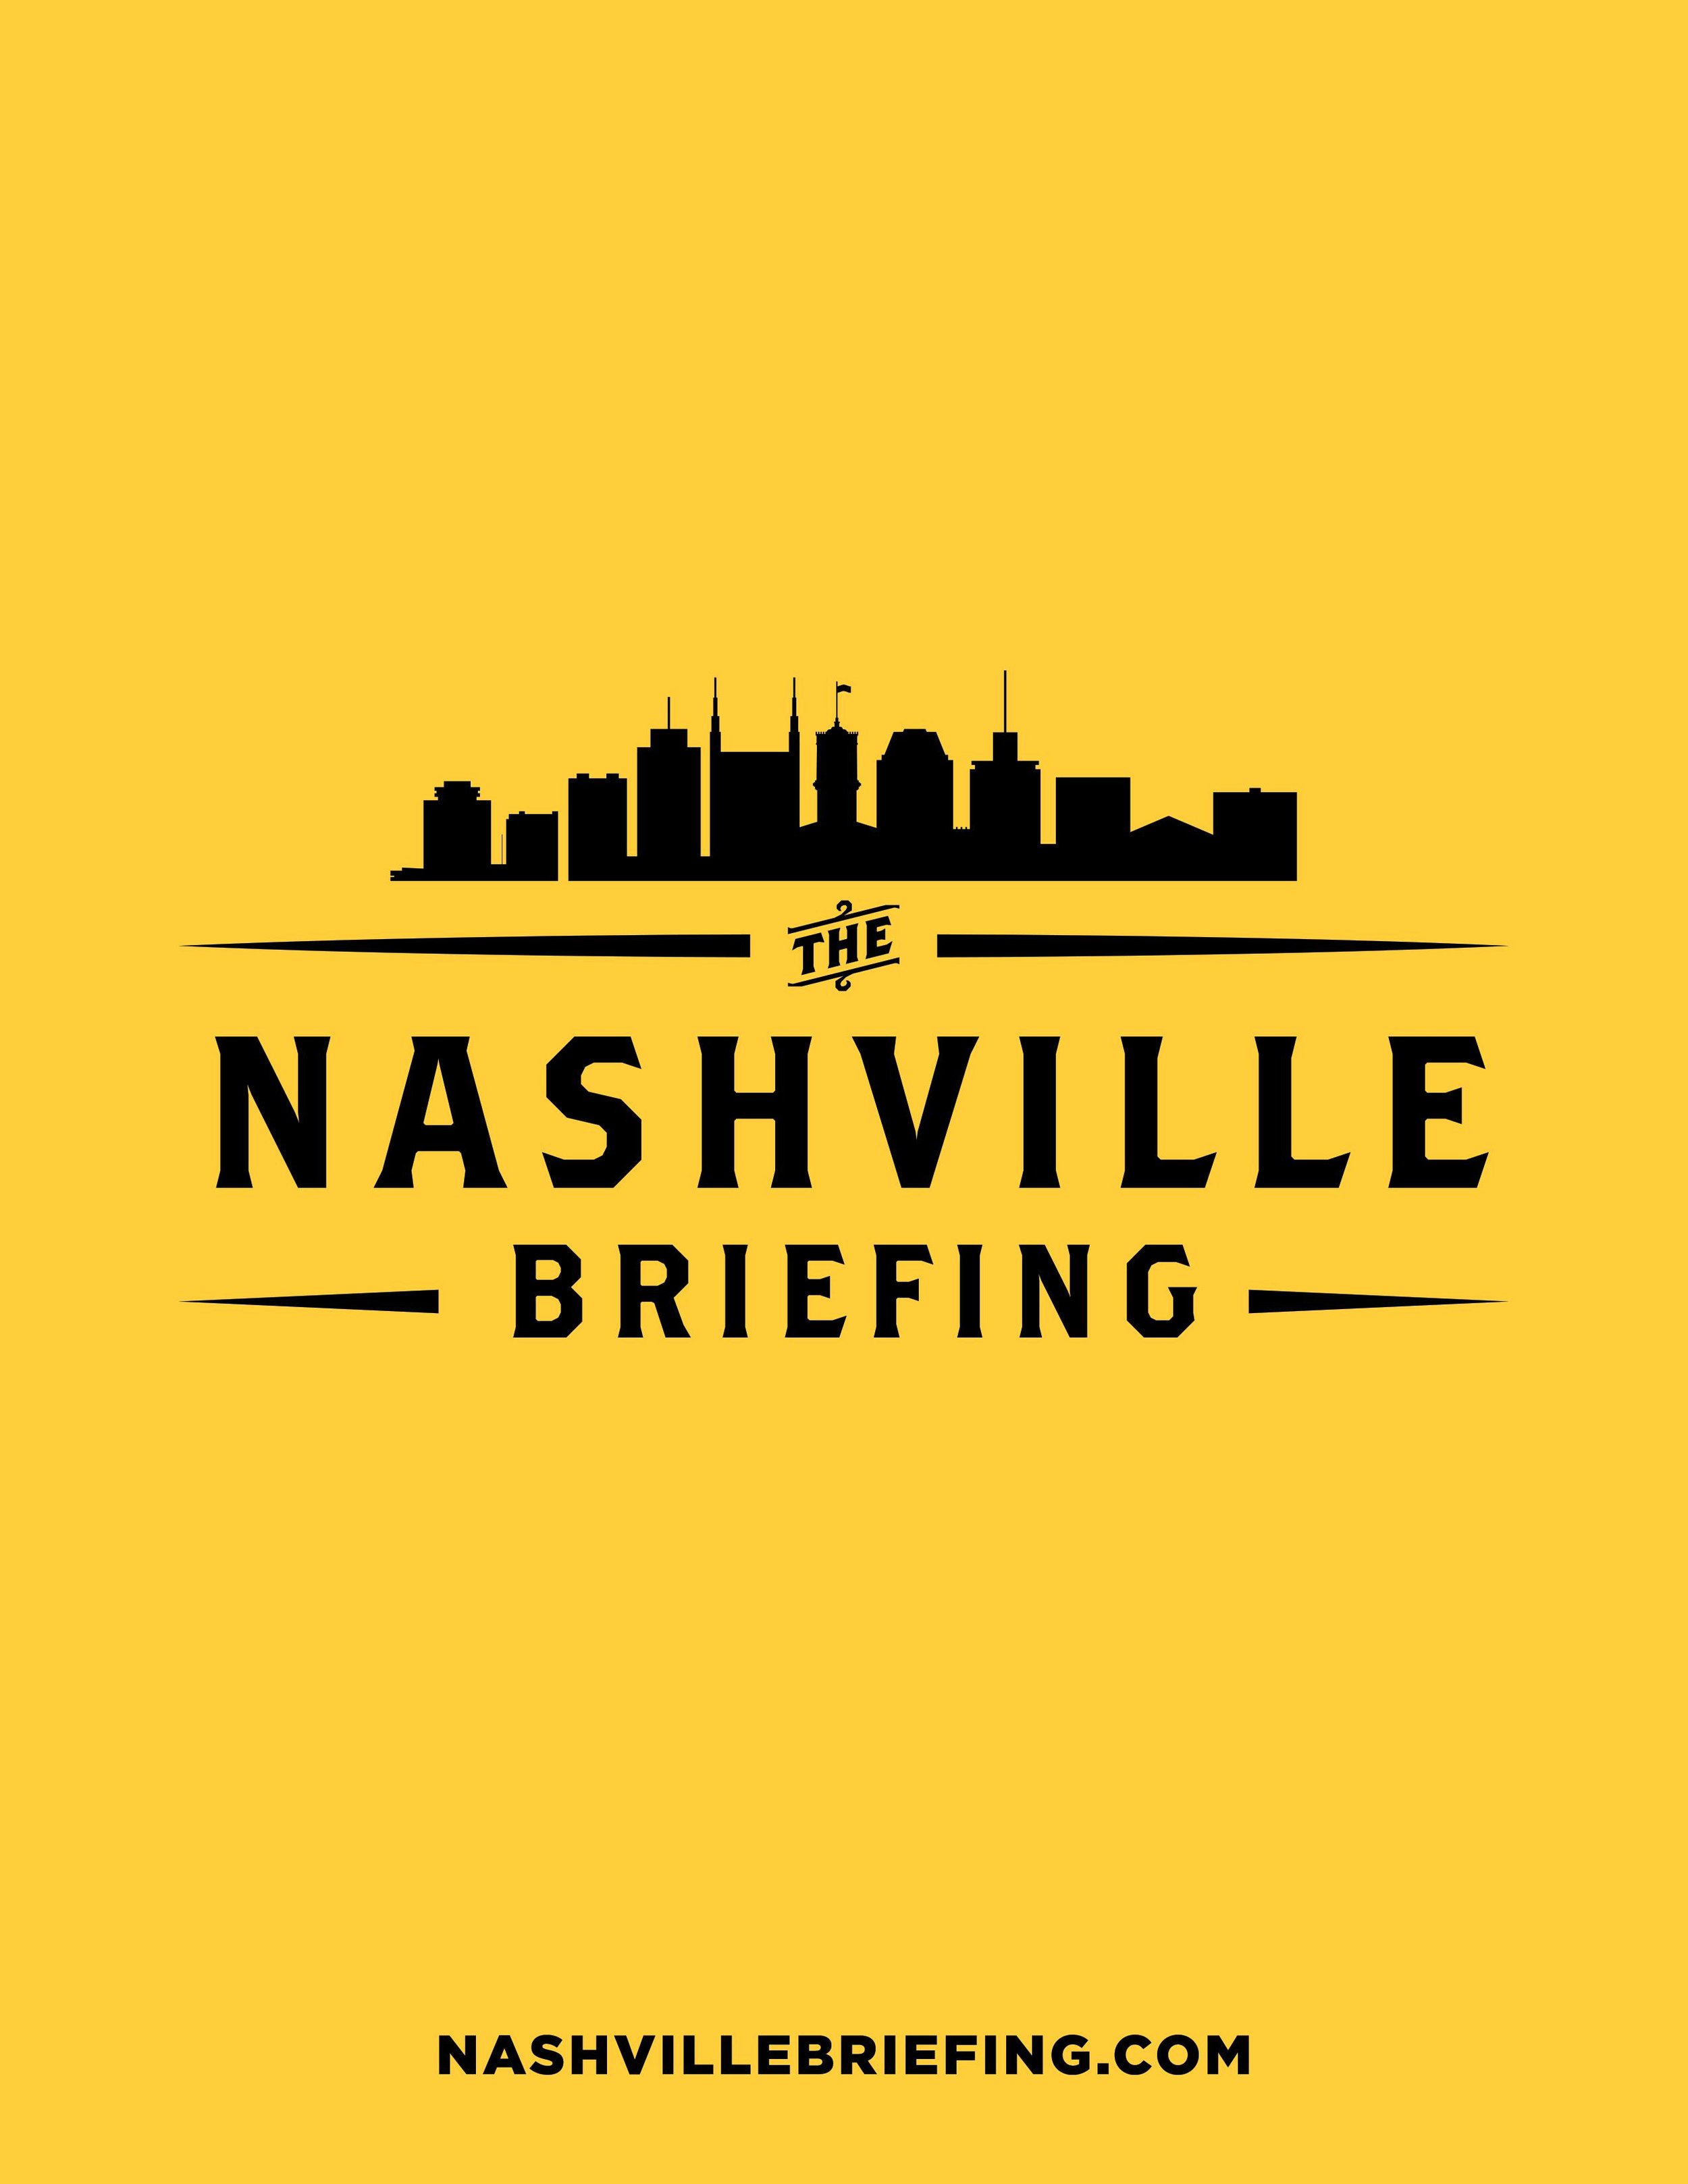 The Nashville Briefing - 30 under 30 - themusicbriefing.com23.jpg